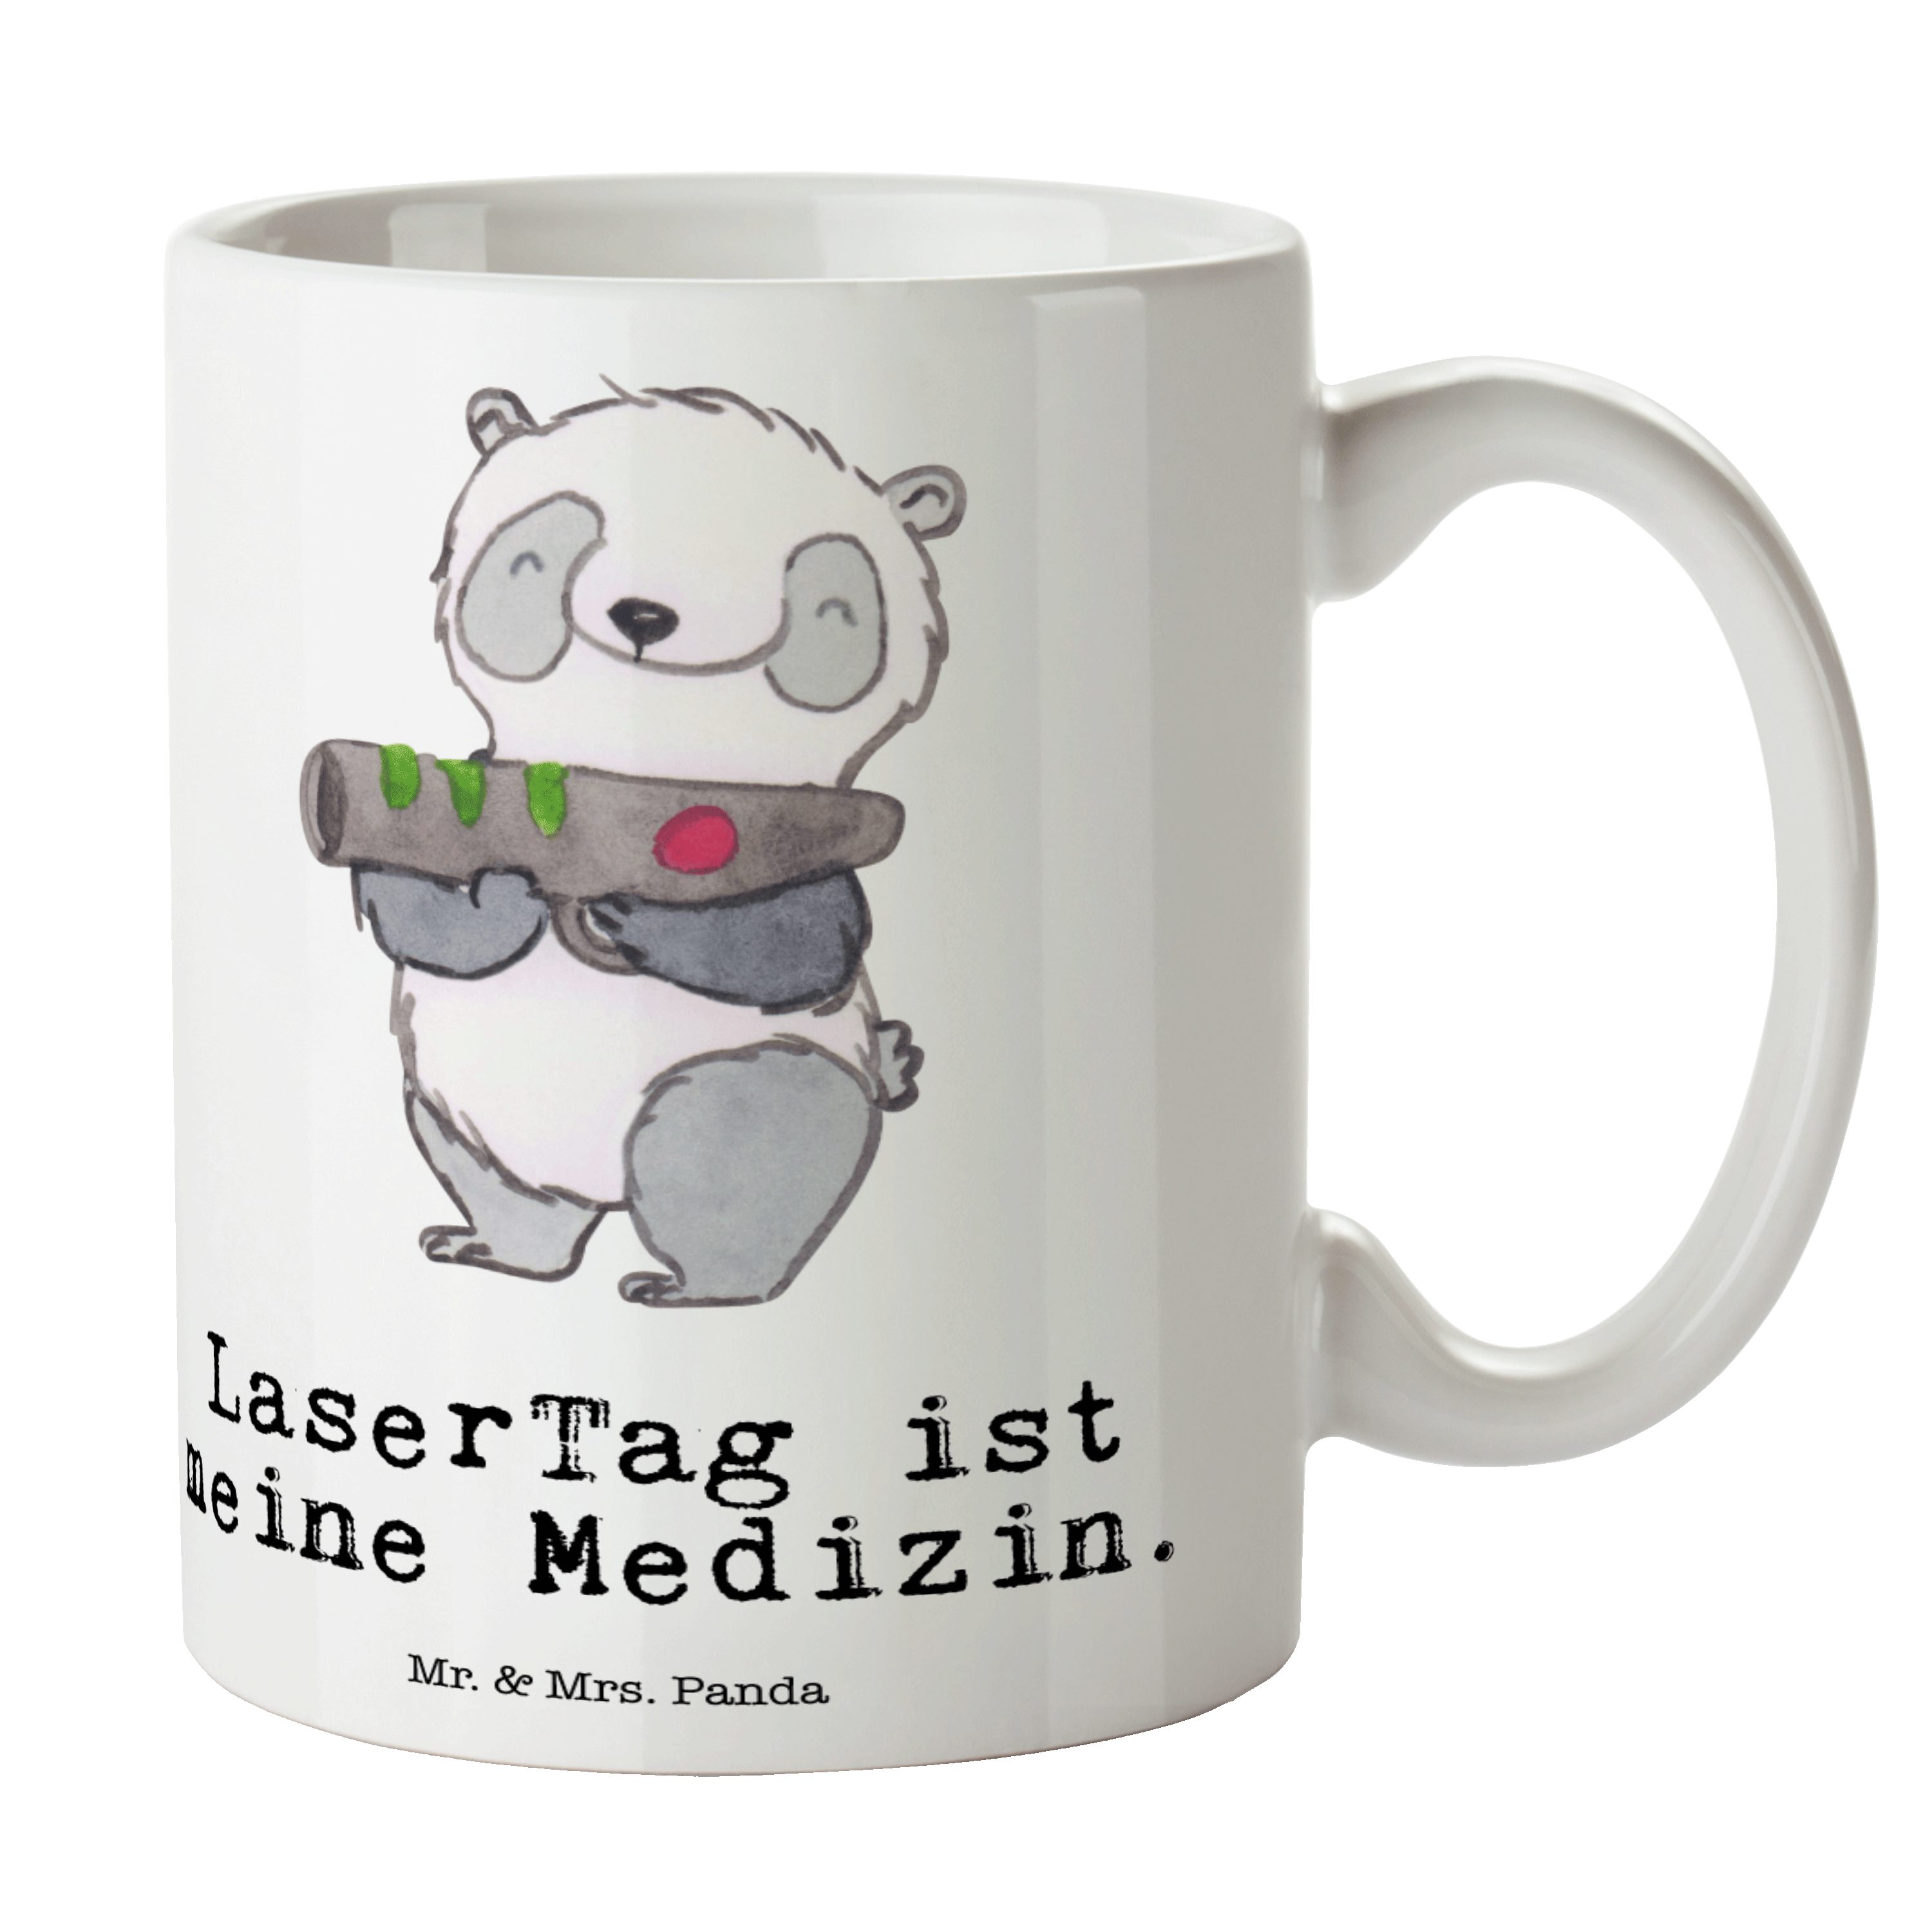 Mr. & Mrs. Panda Tasse Panda LaserTag Medizin - Weiß - Geschenk, Sportart, Teetasse, Schenke, Keramik